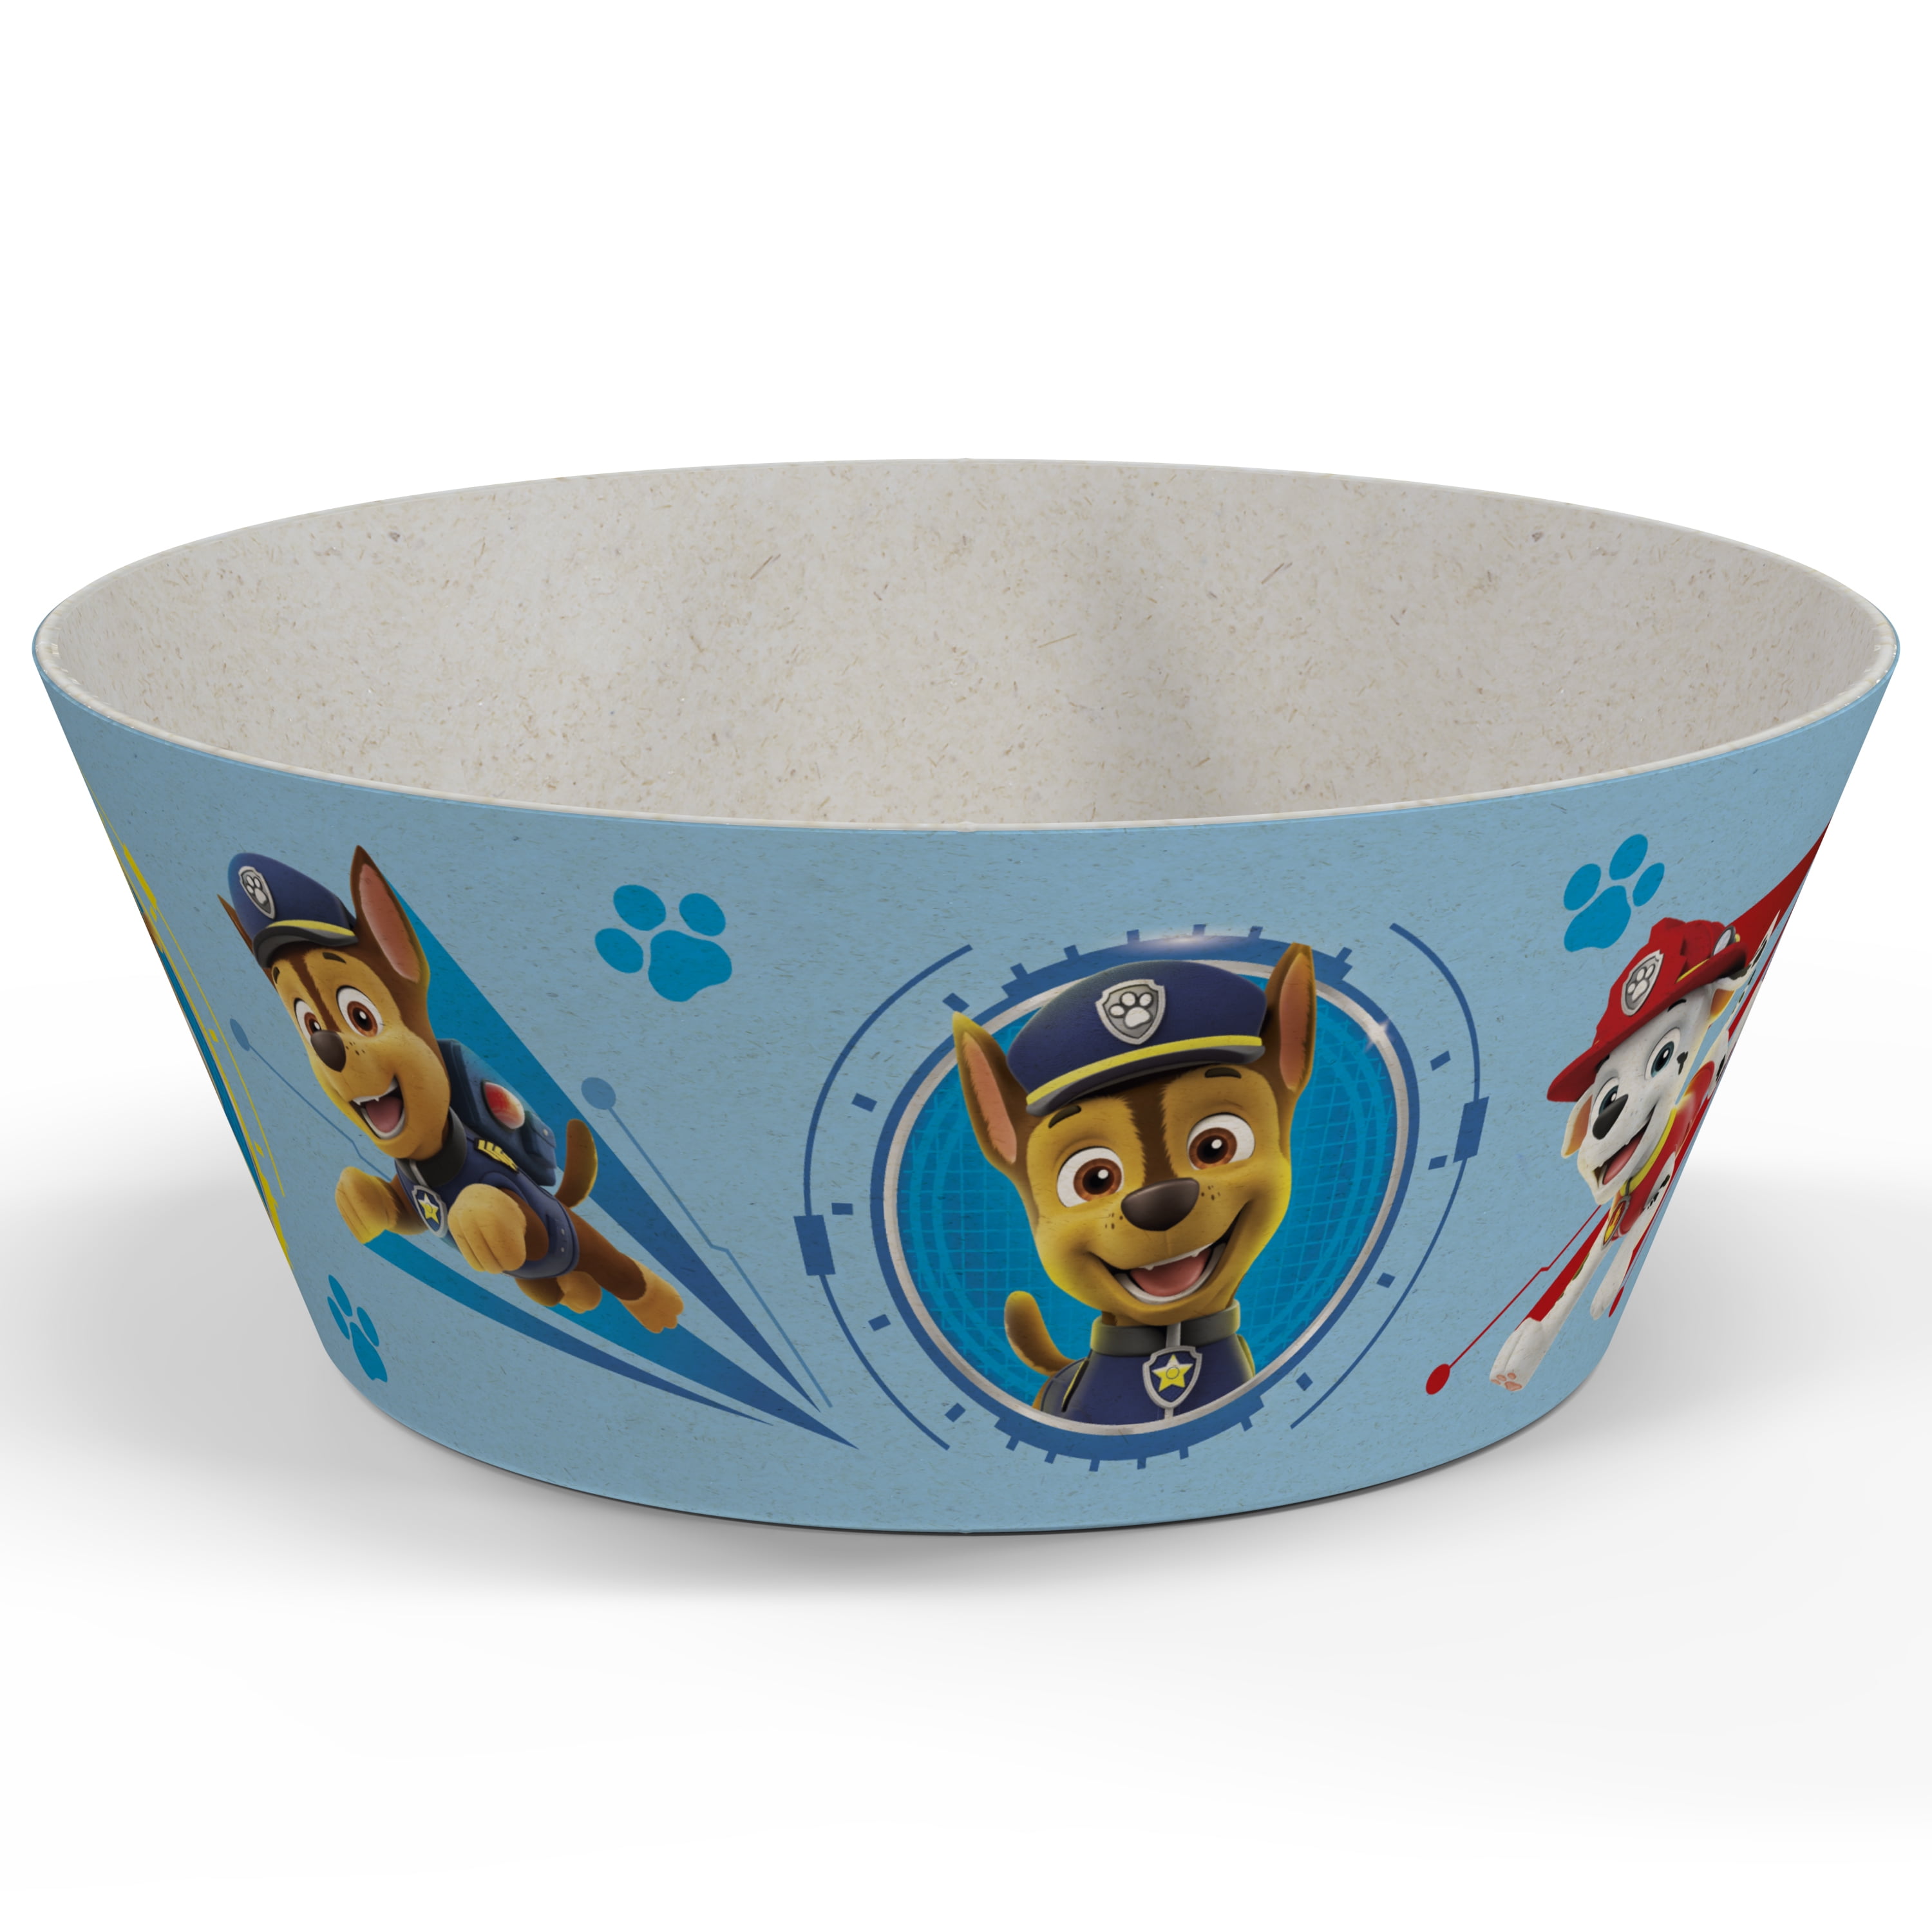 Zak Designs Paw Patrol 5-inch Plastic Kids Bowl, Chase, Rubble, Marshall